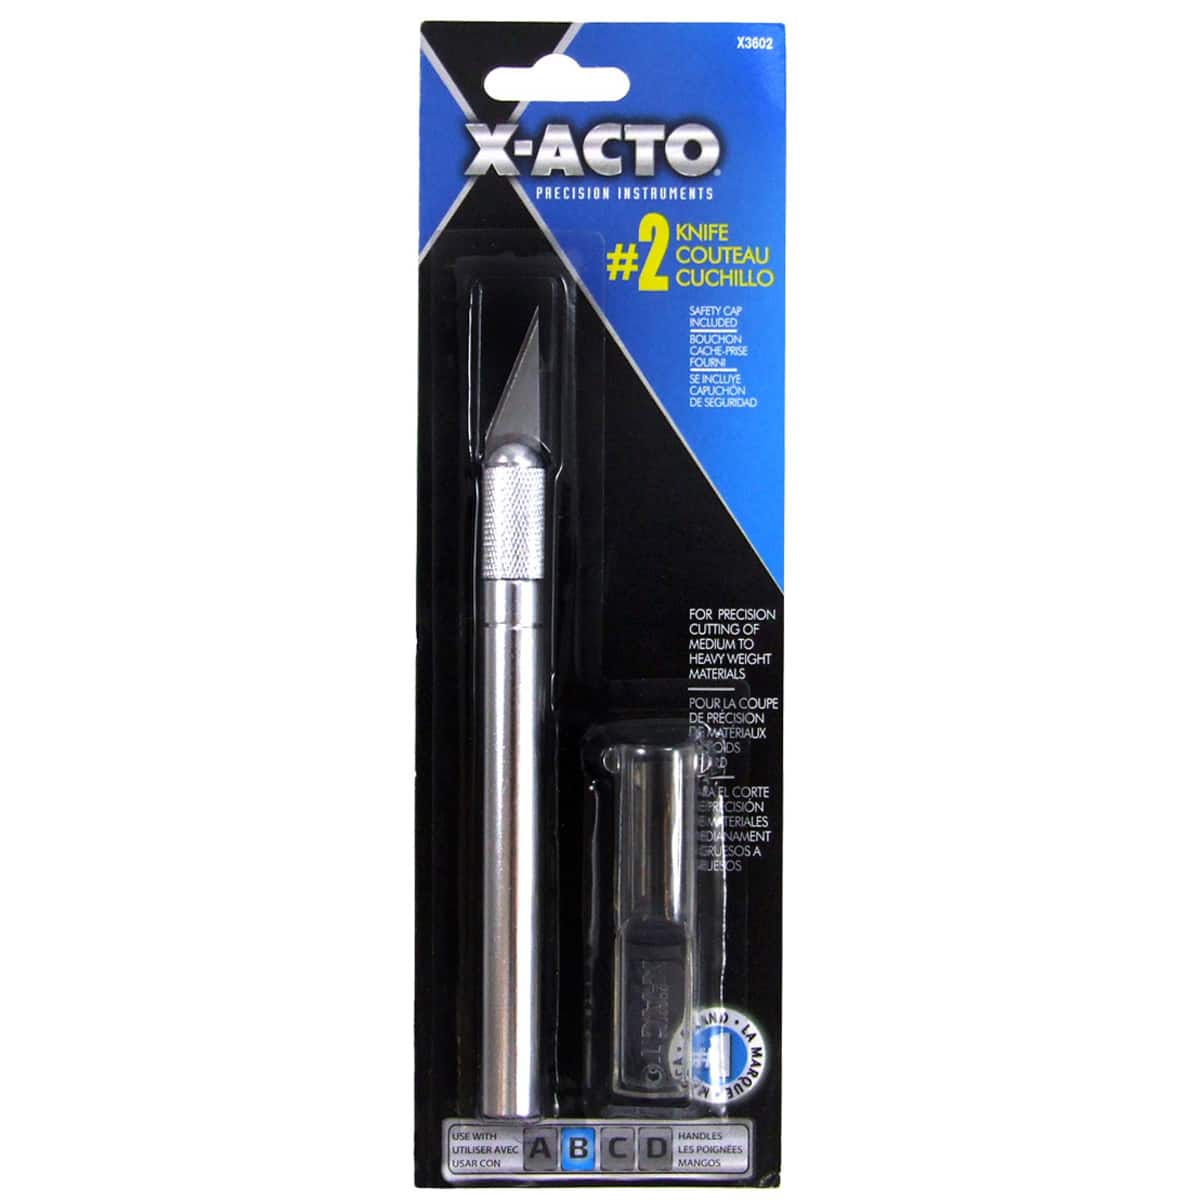 XActo #2 Blades